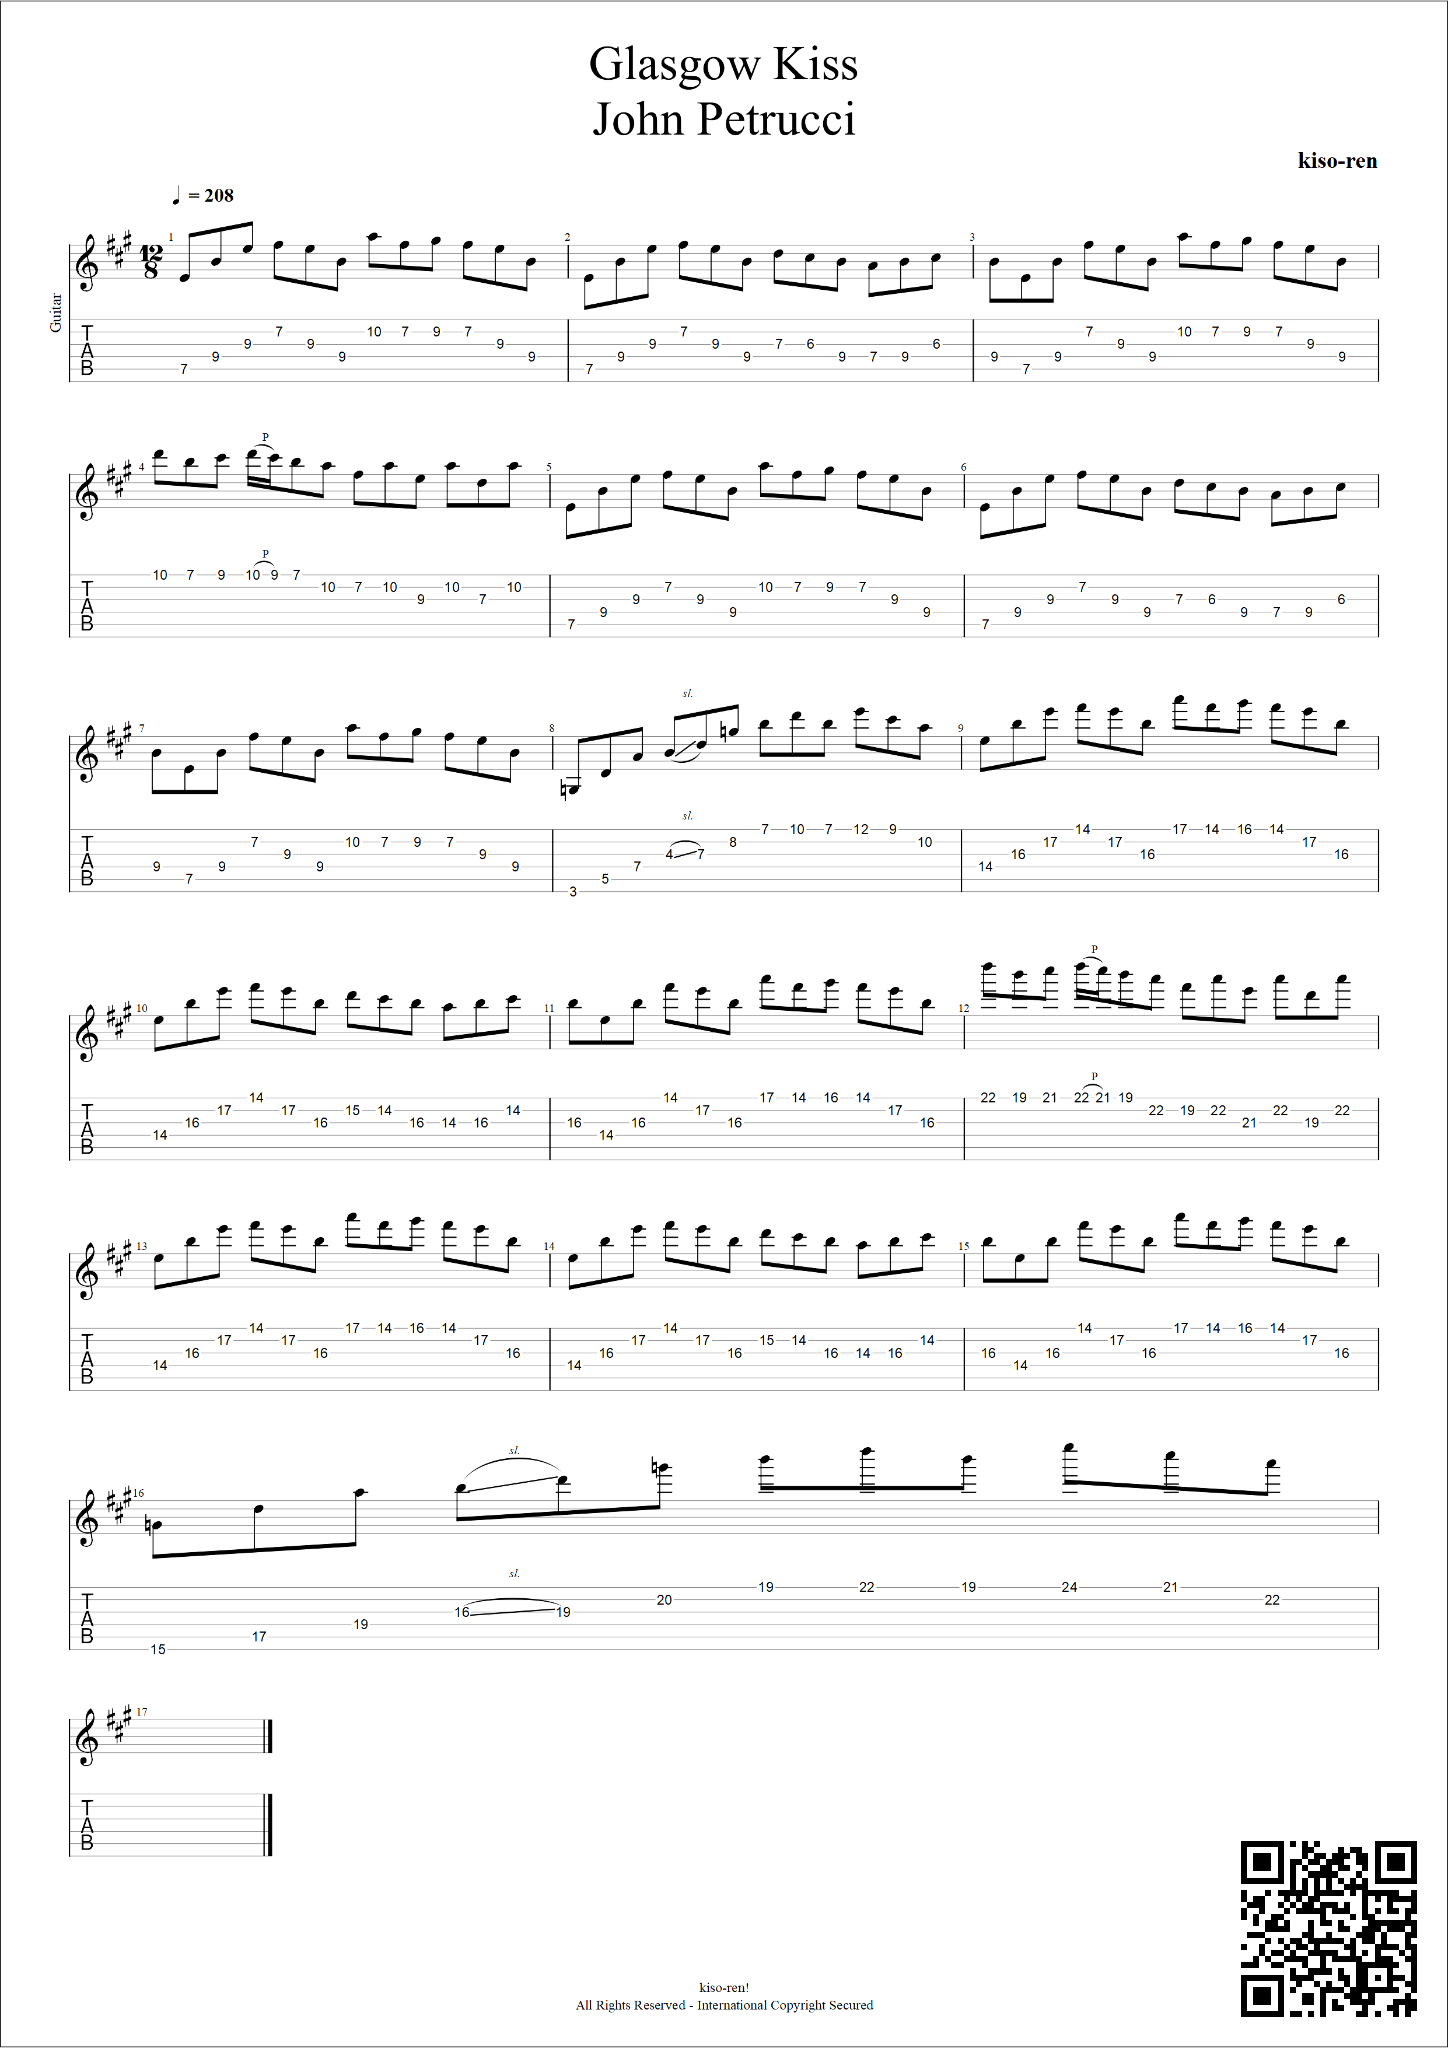 【TAB】Glasgow Kiss / John Petrucci Guitar Intro Practice ジョンペトルーシ グラスゴウキス イントロ ギターピッキング練習 【Guitar Picking Vol.52】